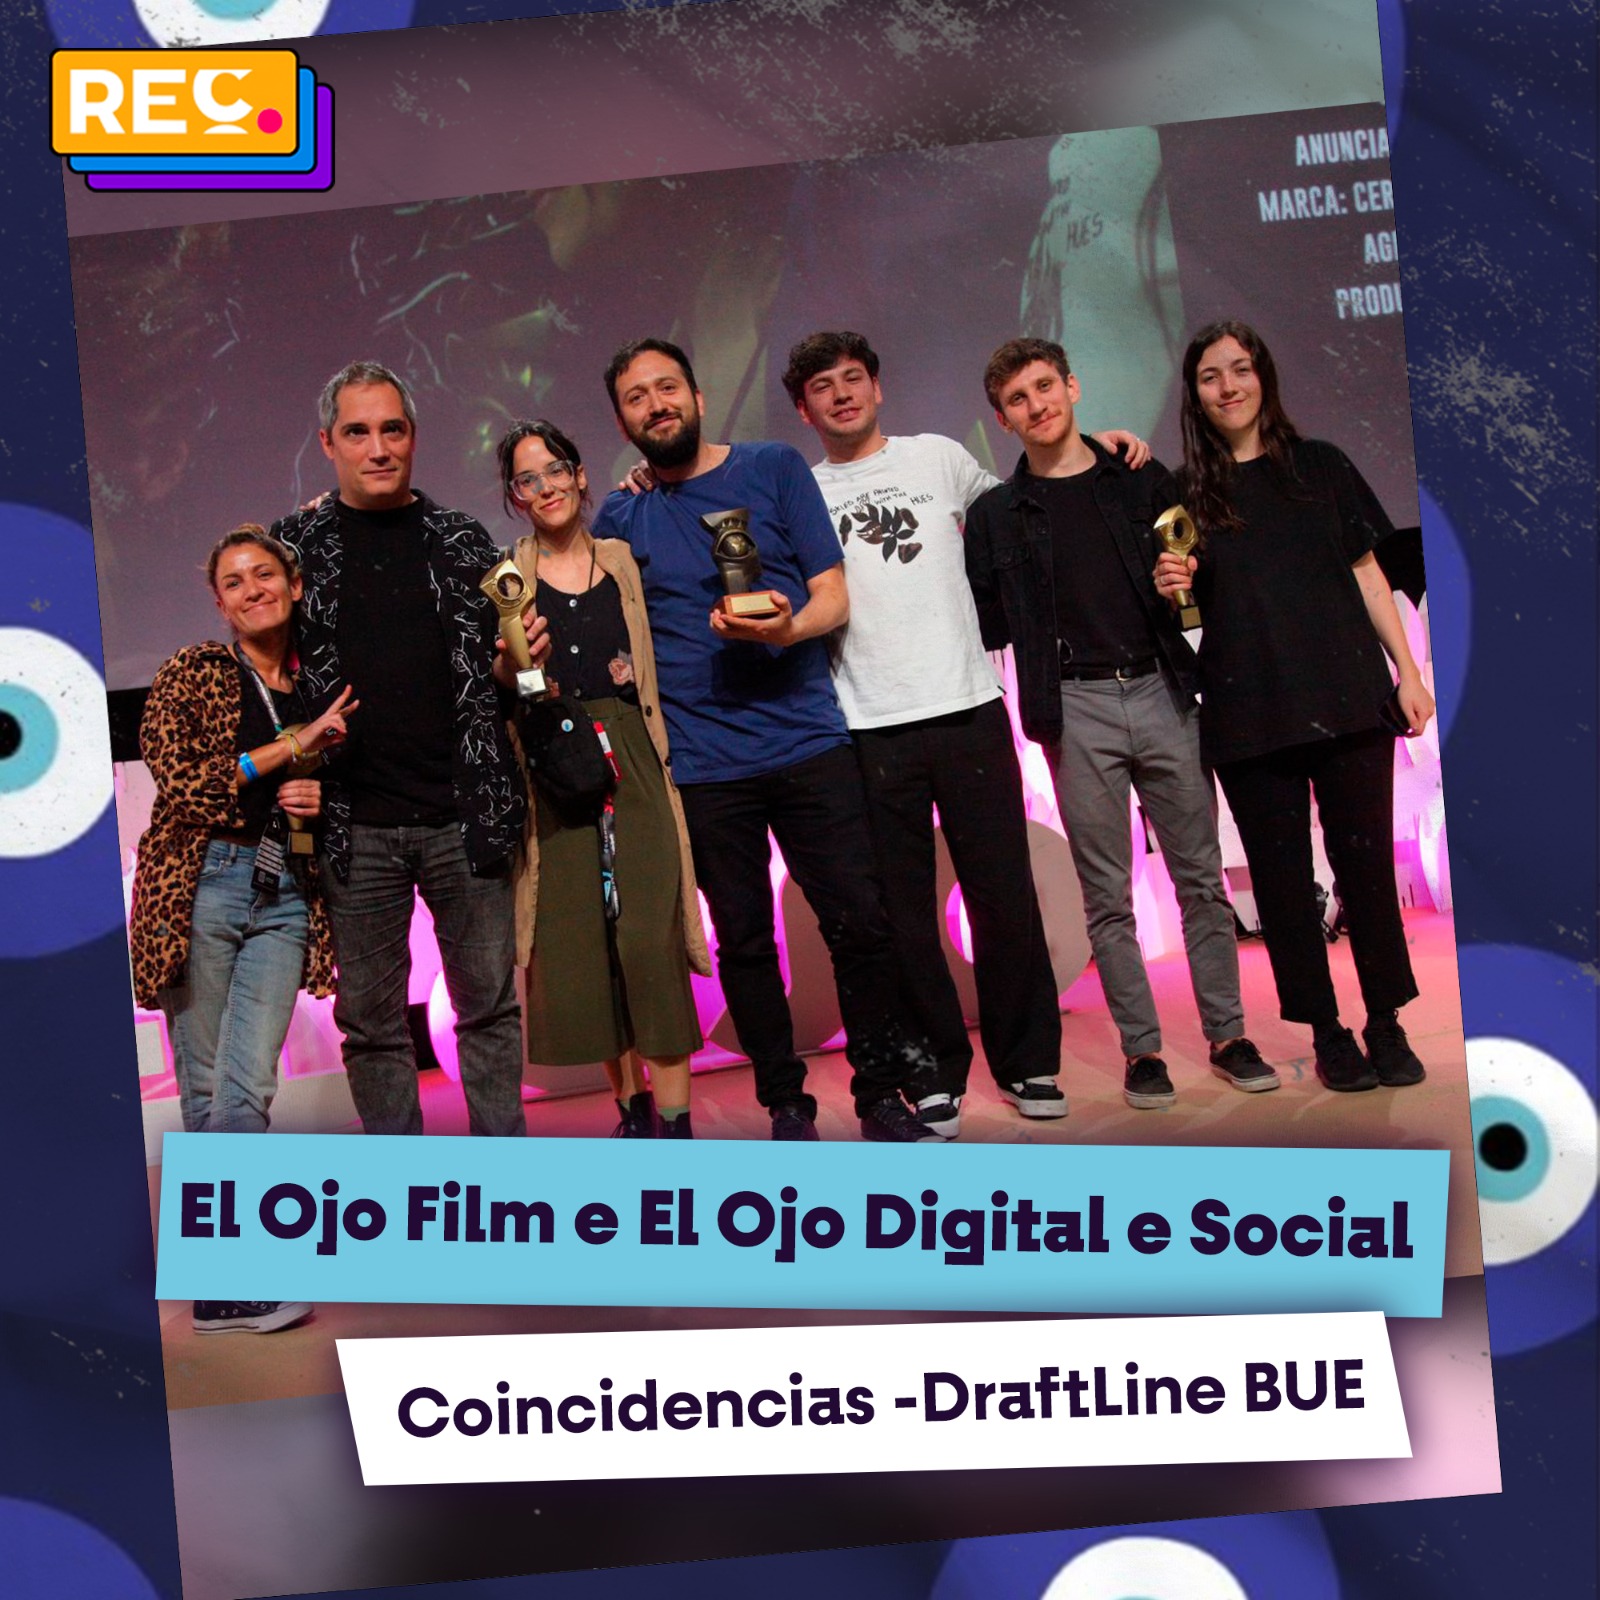 El Ojo film e El Ojo Social/Digital: